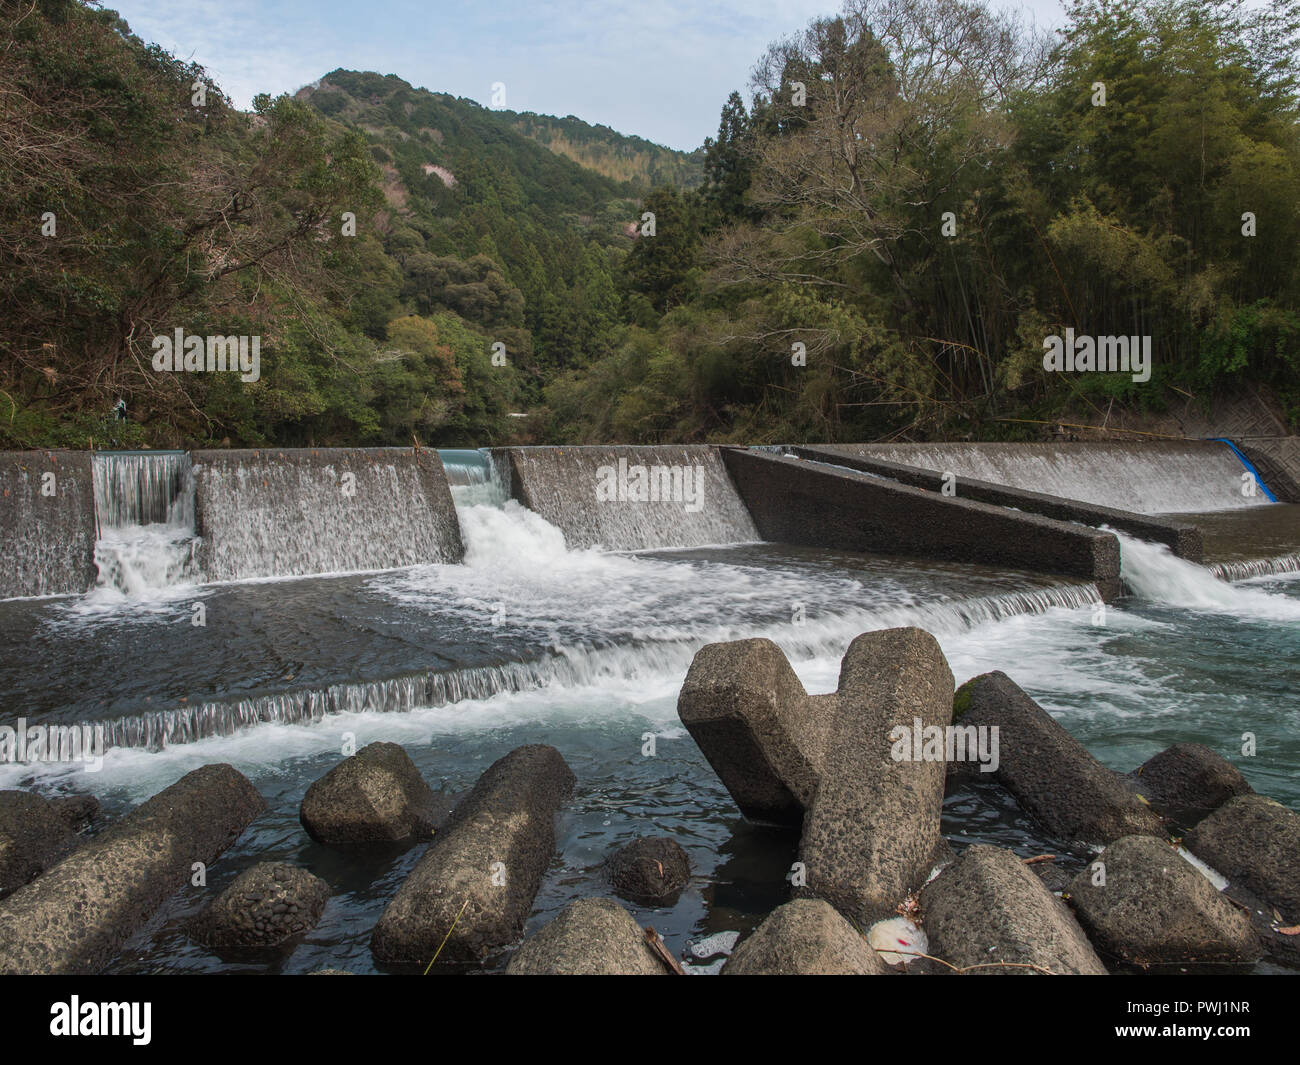 River control, weir shaping river flow with tetrapods below, Iyoki River, Kochi, Shikoku, Japan Stock Photo